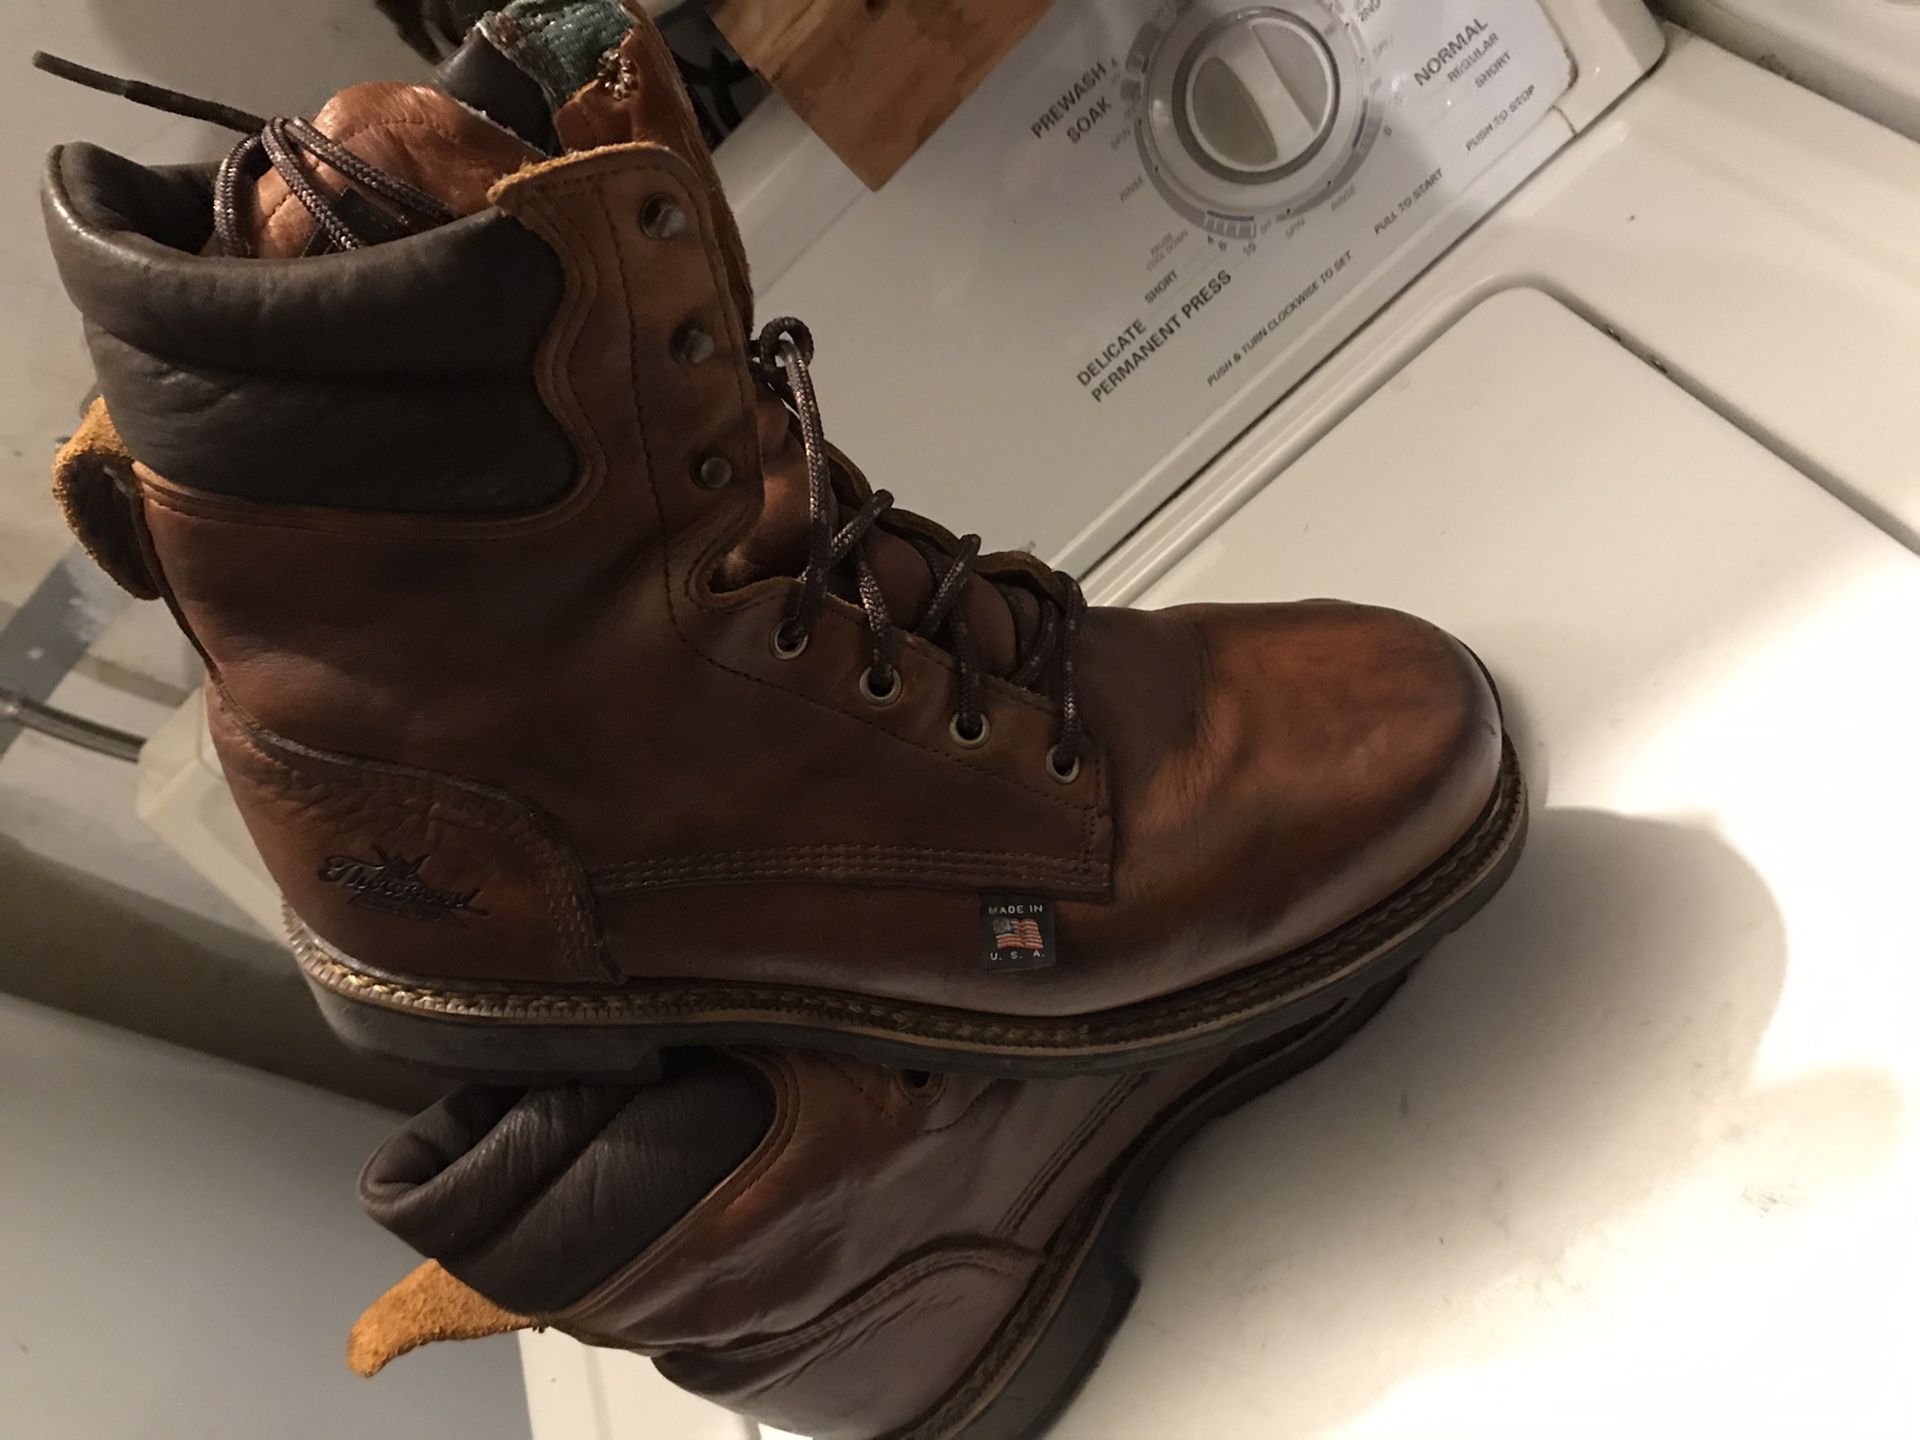 Thorogood work boots $80